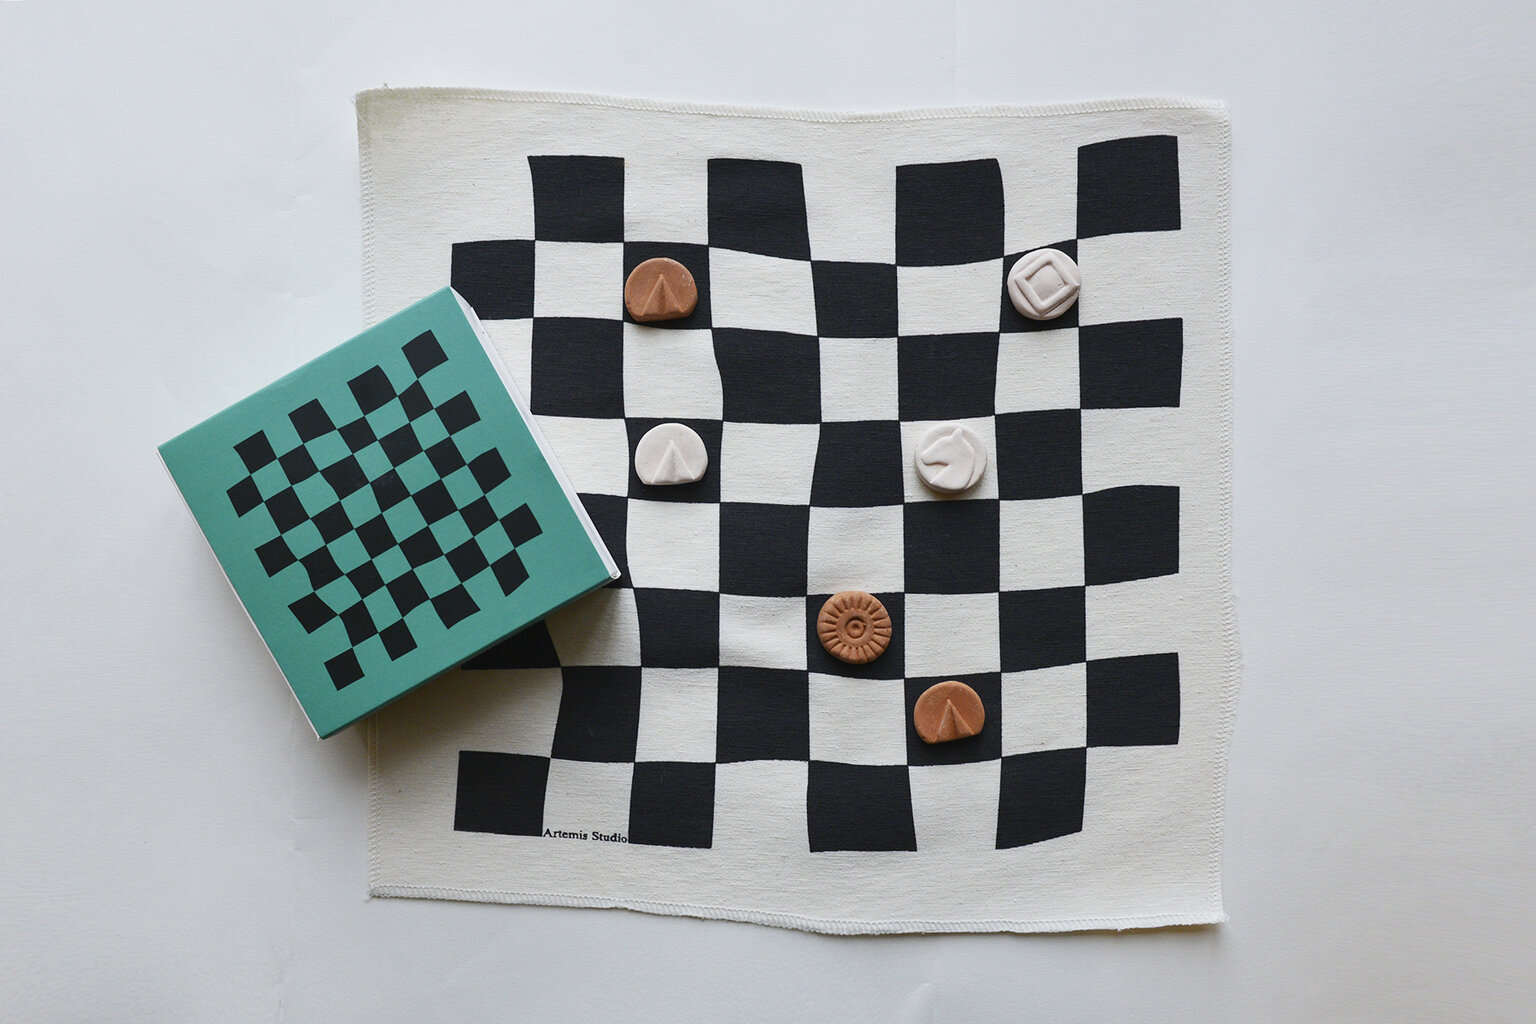 Handmade board game "Chess"